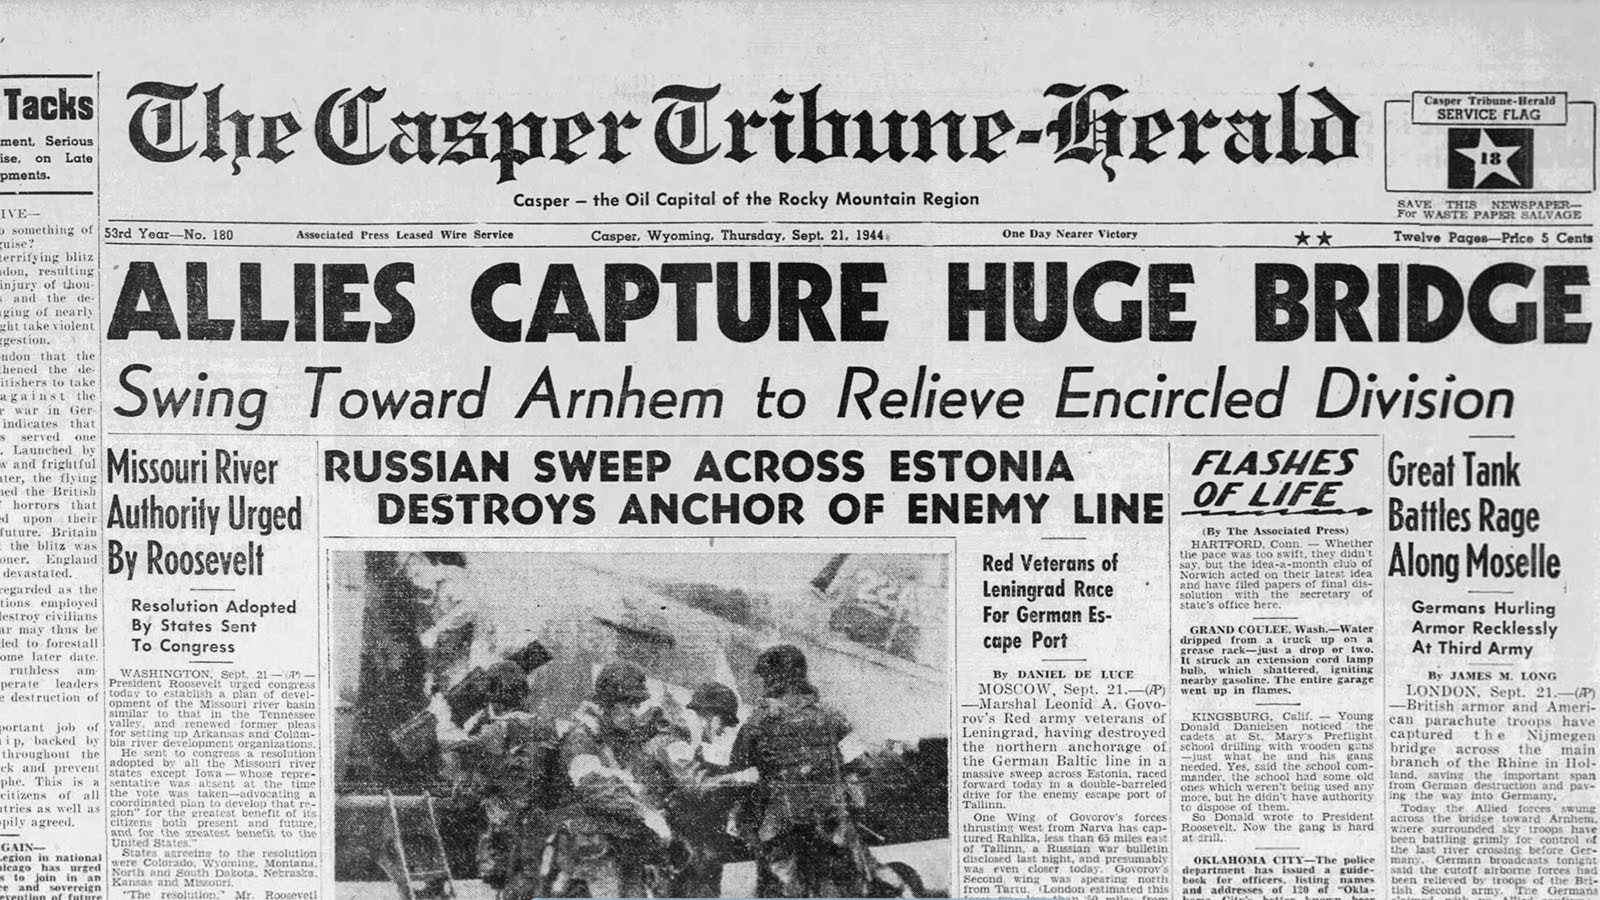 The Casper Tribune-Herald trumpets the capture of a bridge during Operation Market Garden on Sept. 21, 1944, the day Harold Shelden was killed.